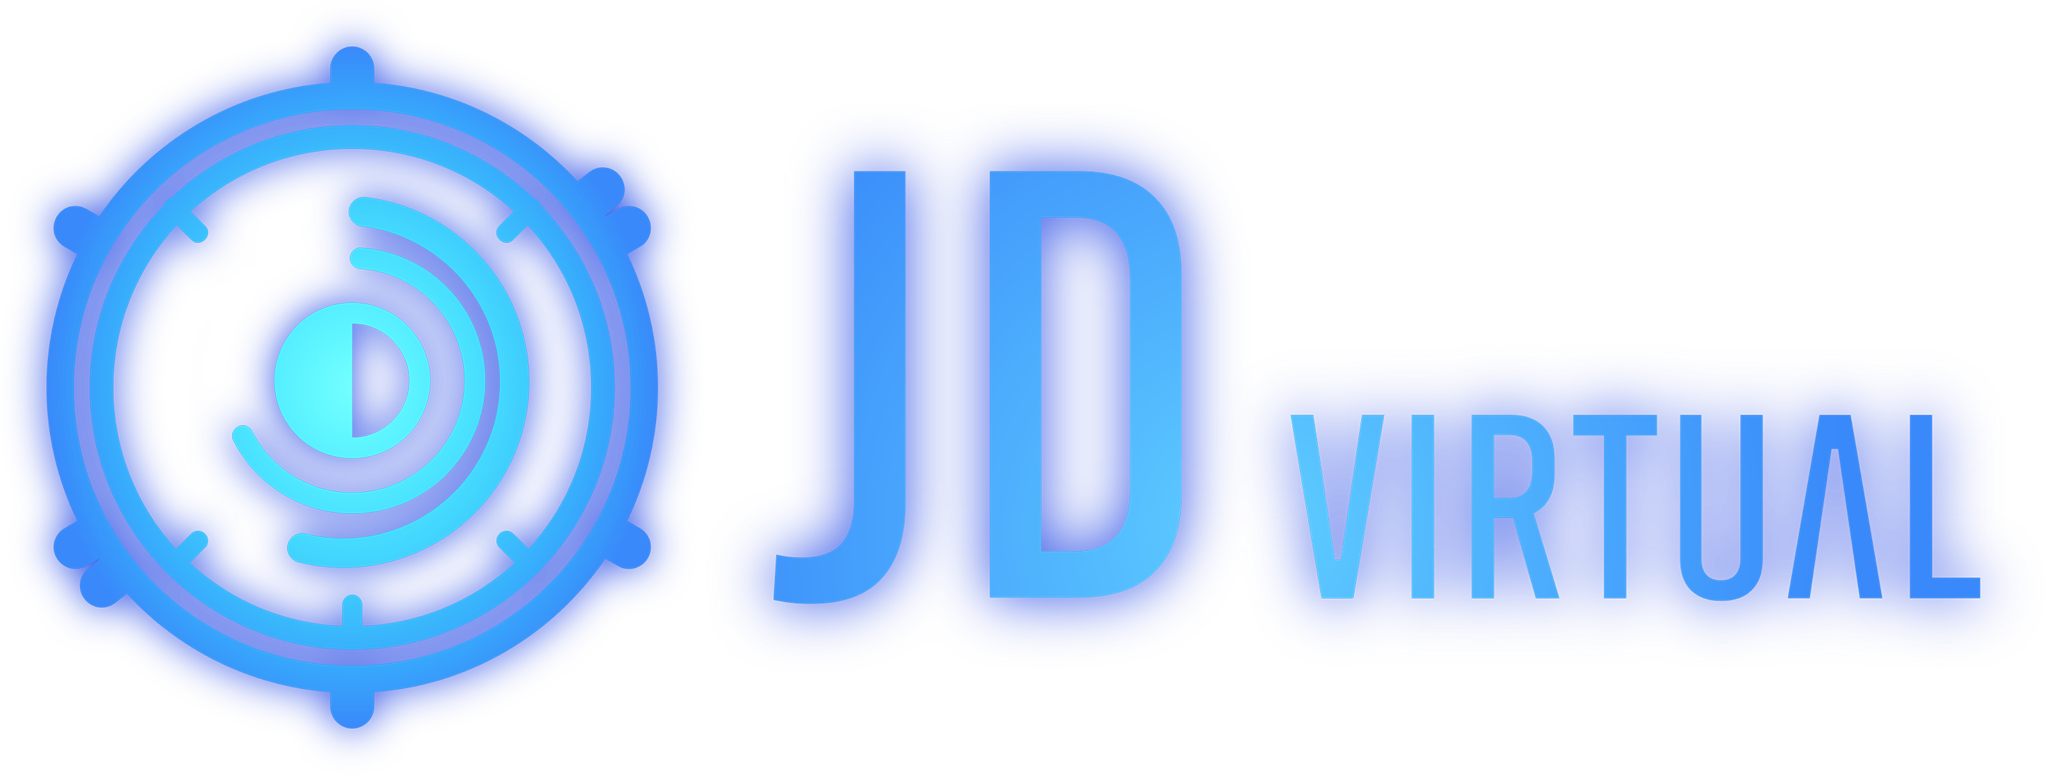 long jdvirtual logo
